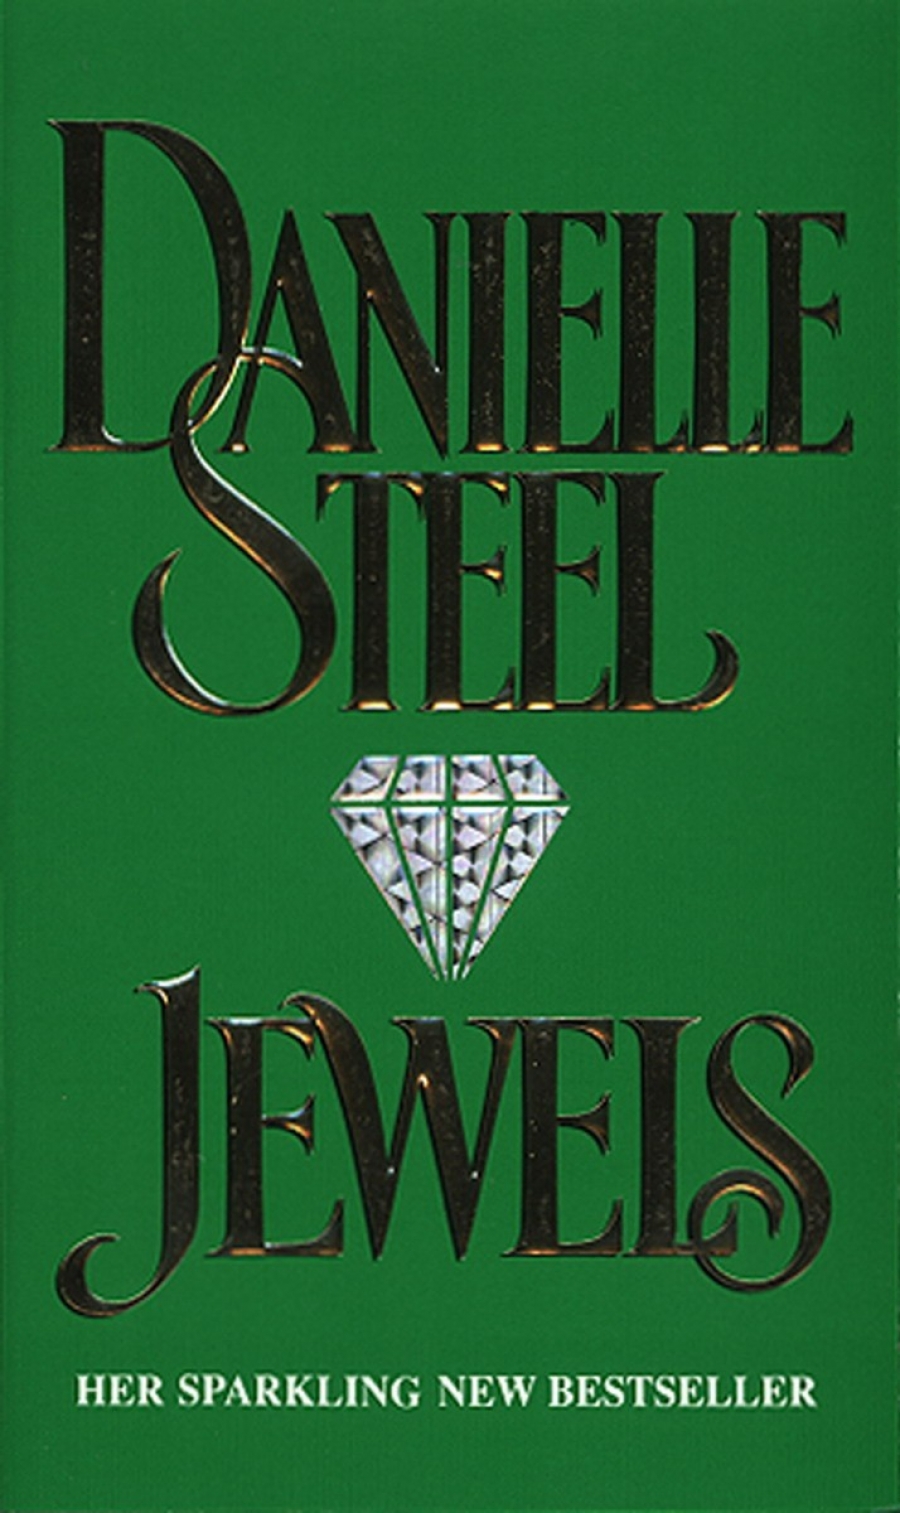 Steel Danielle Jewels 